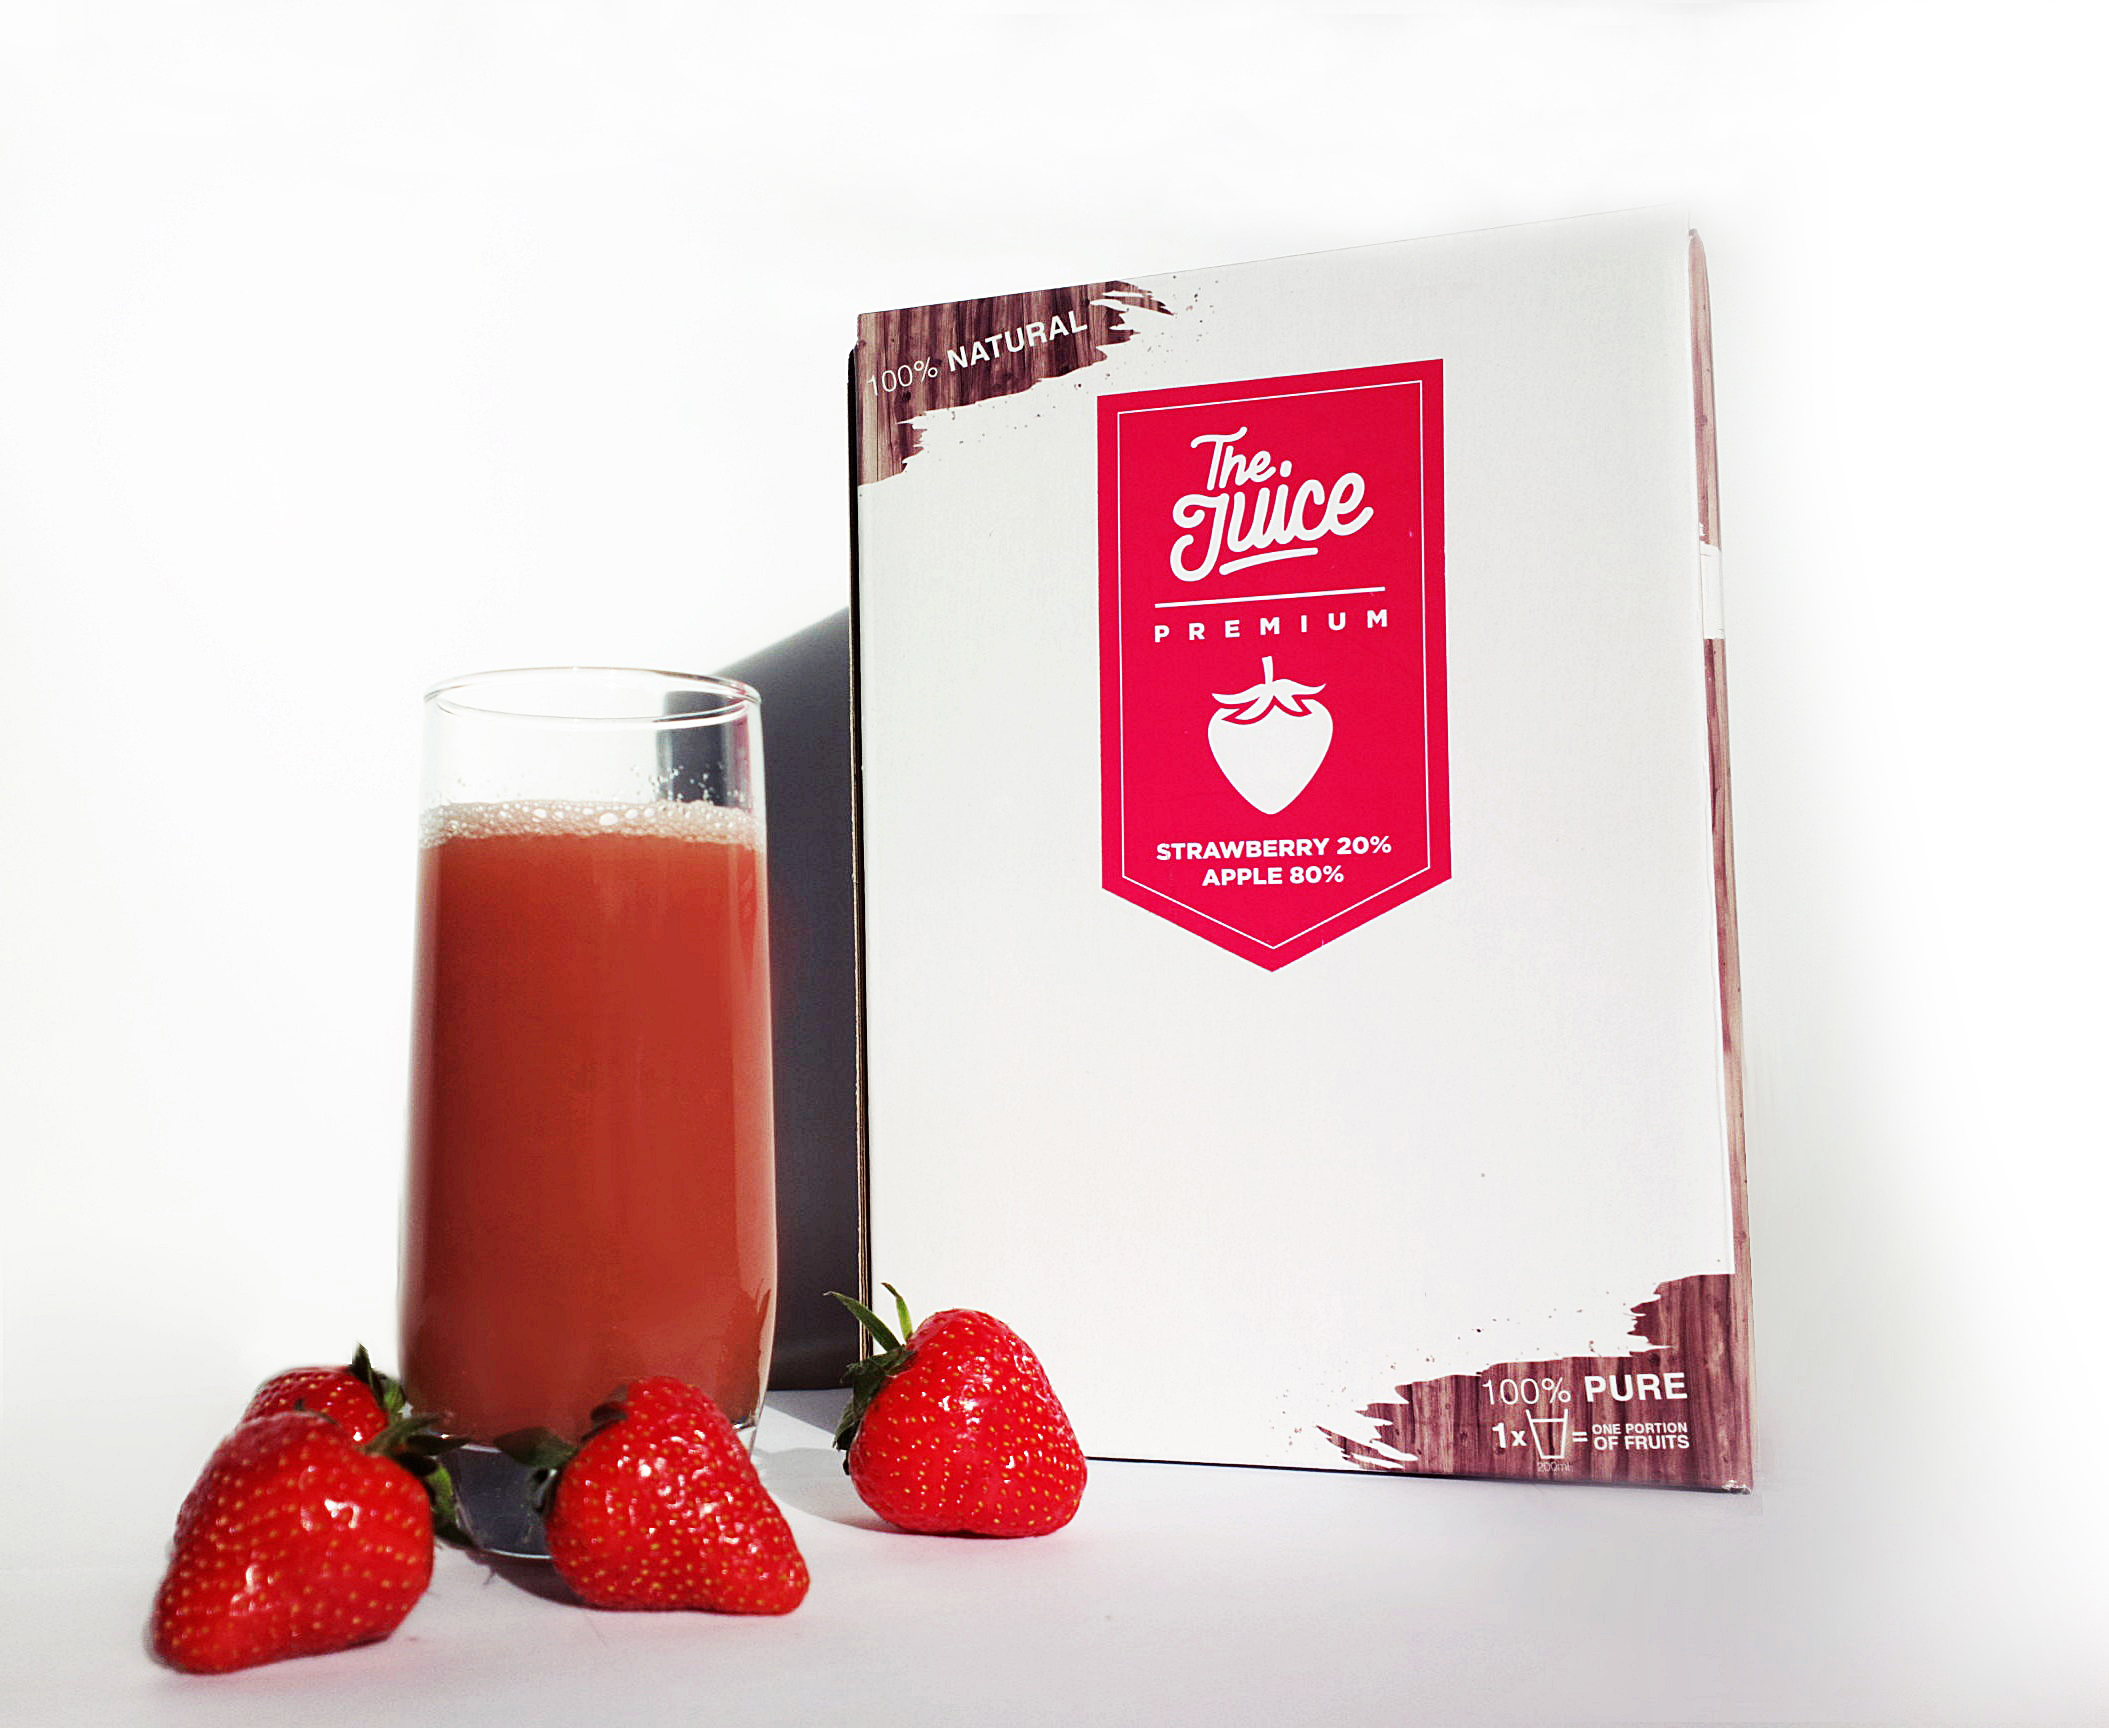 The Juice Premium Strawberry & Apple 3L